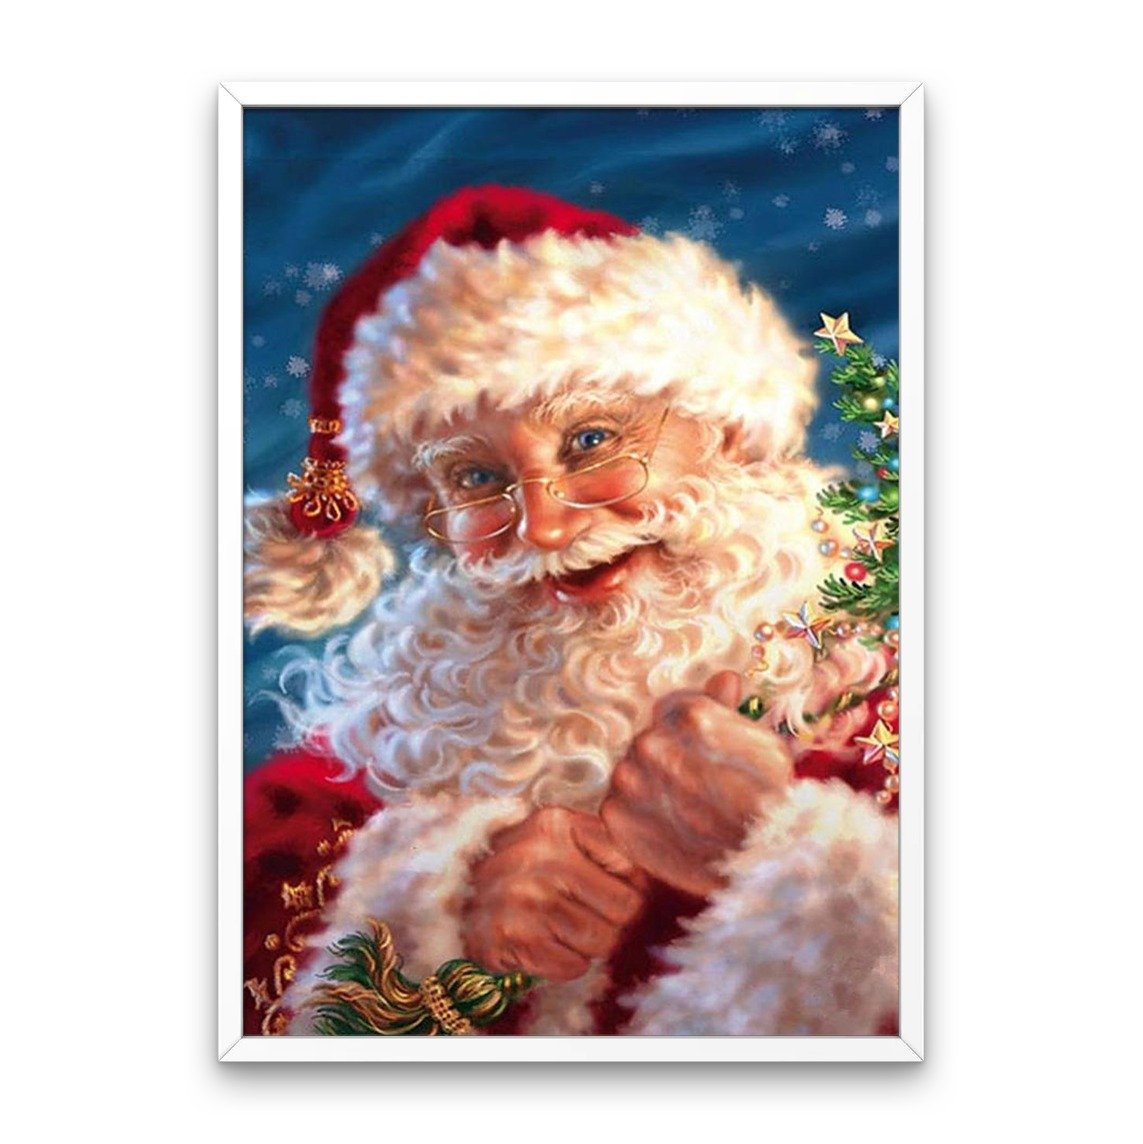 Happy Santa Clause at Christmas - Diamond Painting Kit